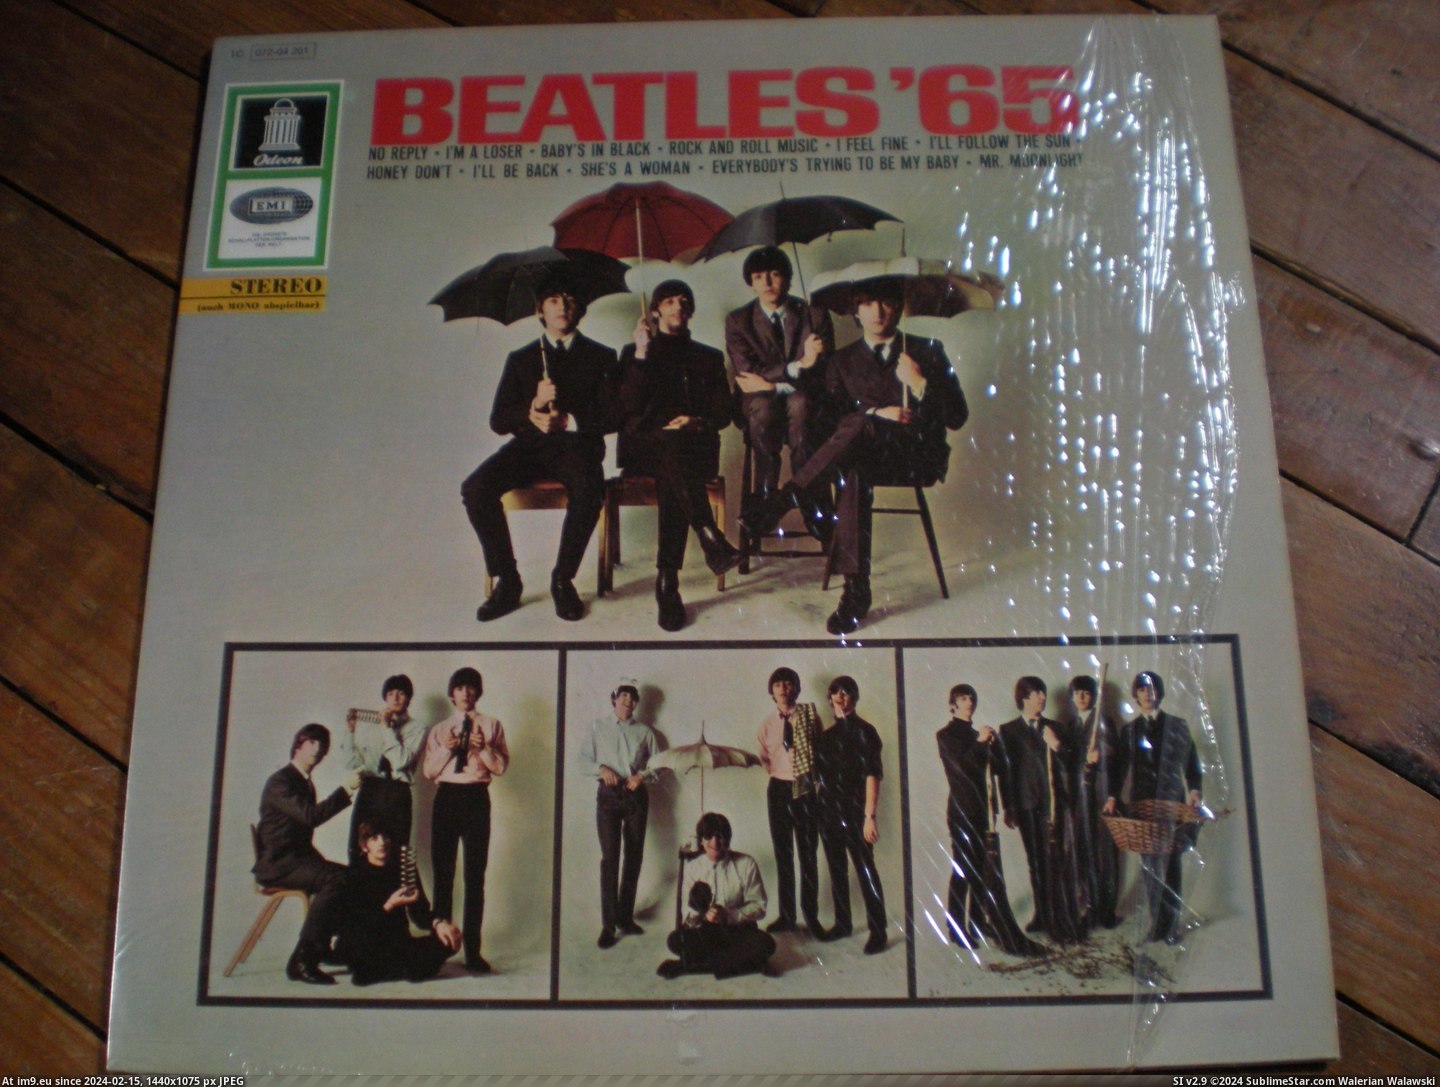  #Beatles  Beatles 65 5 Pic. (Image of album new 1))